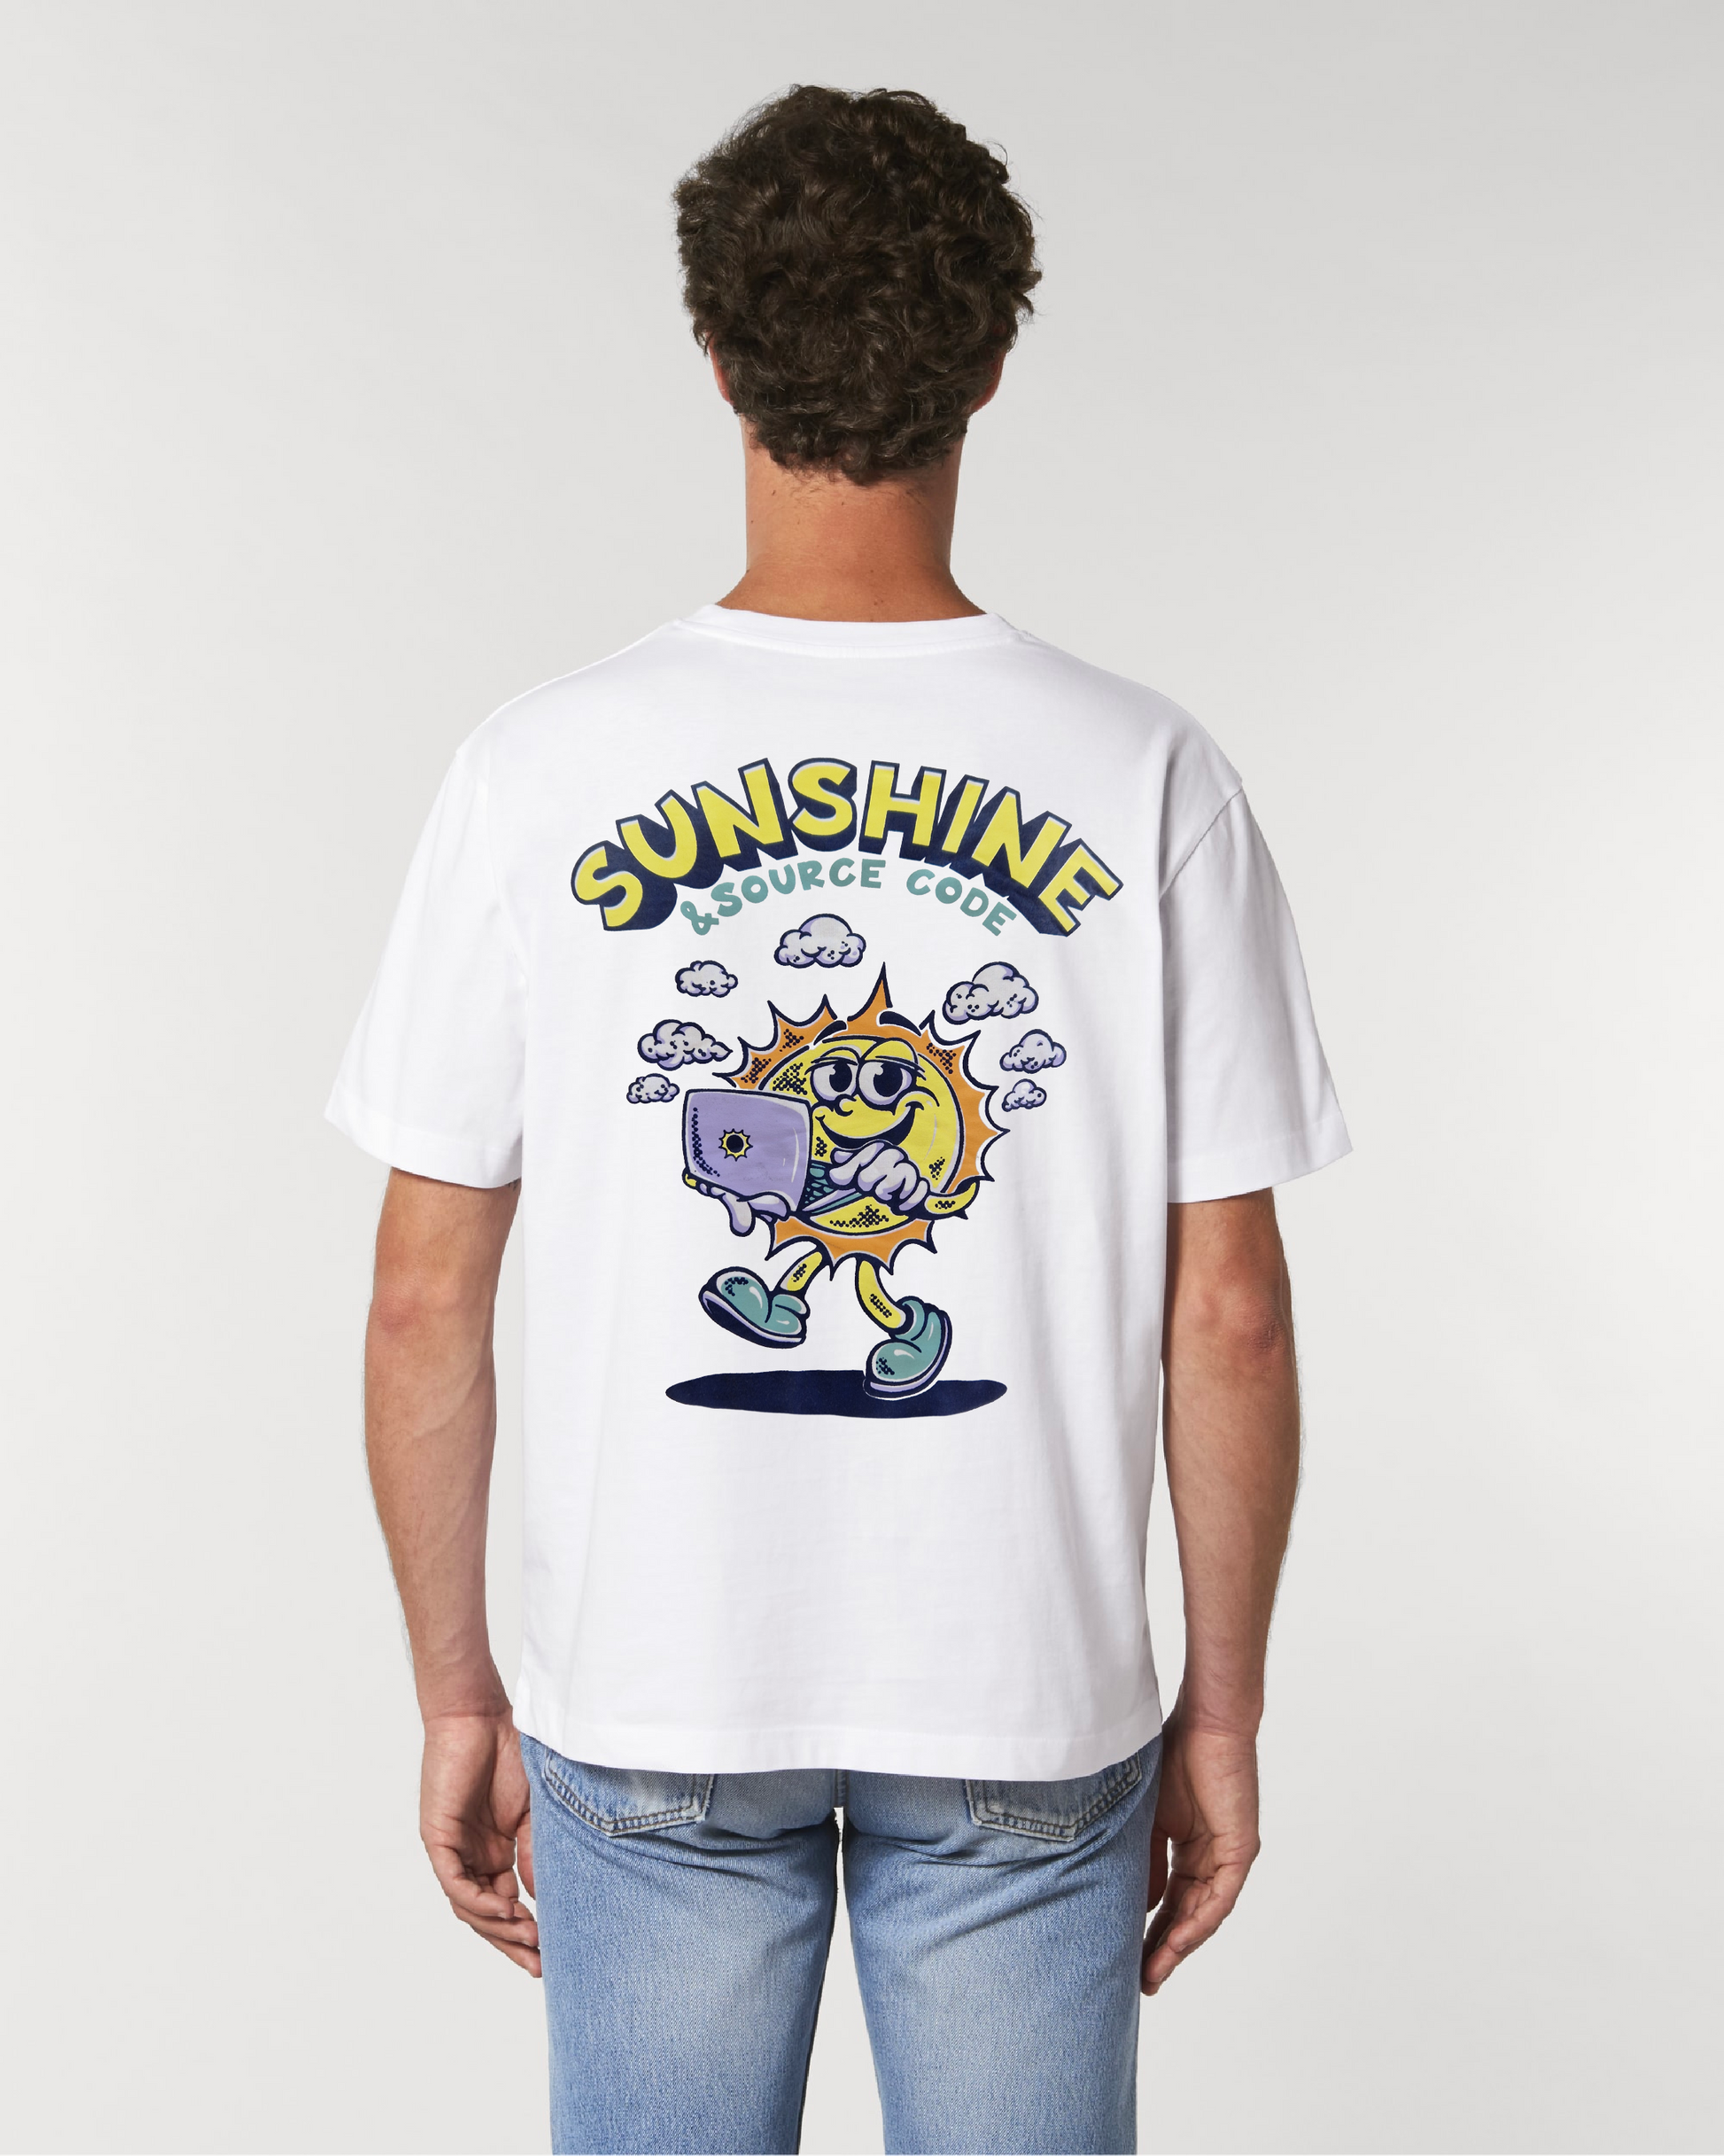 Men wearing a Coder / Programmer t-shirt with the backprint "Sunshine & Source Code"